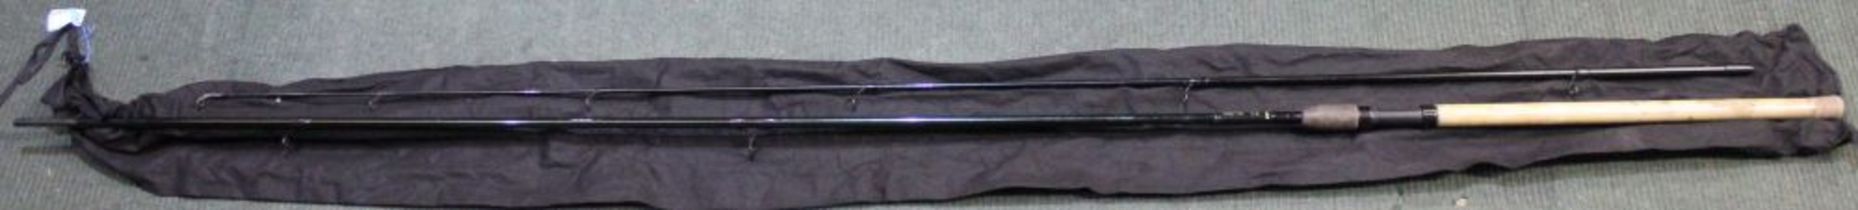 Fox Barbel Plus 1.75lb 2-piece 12 foot rod